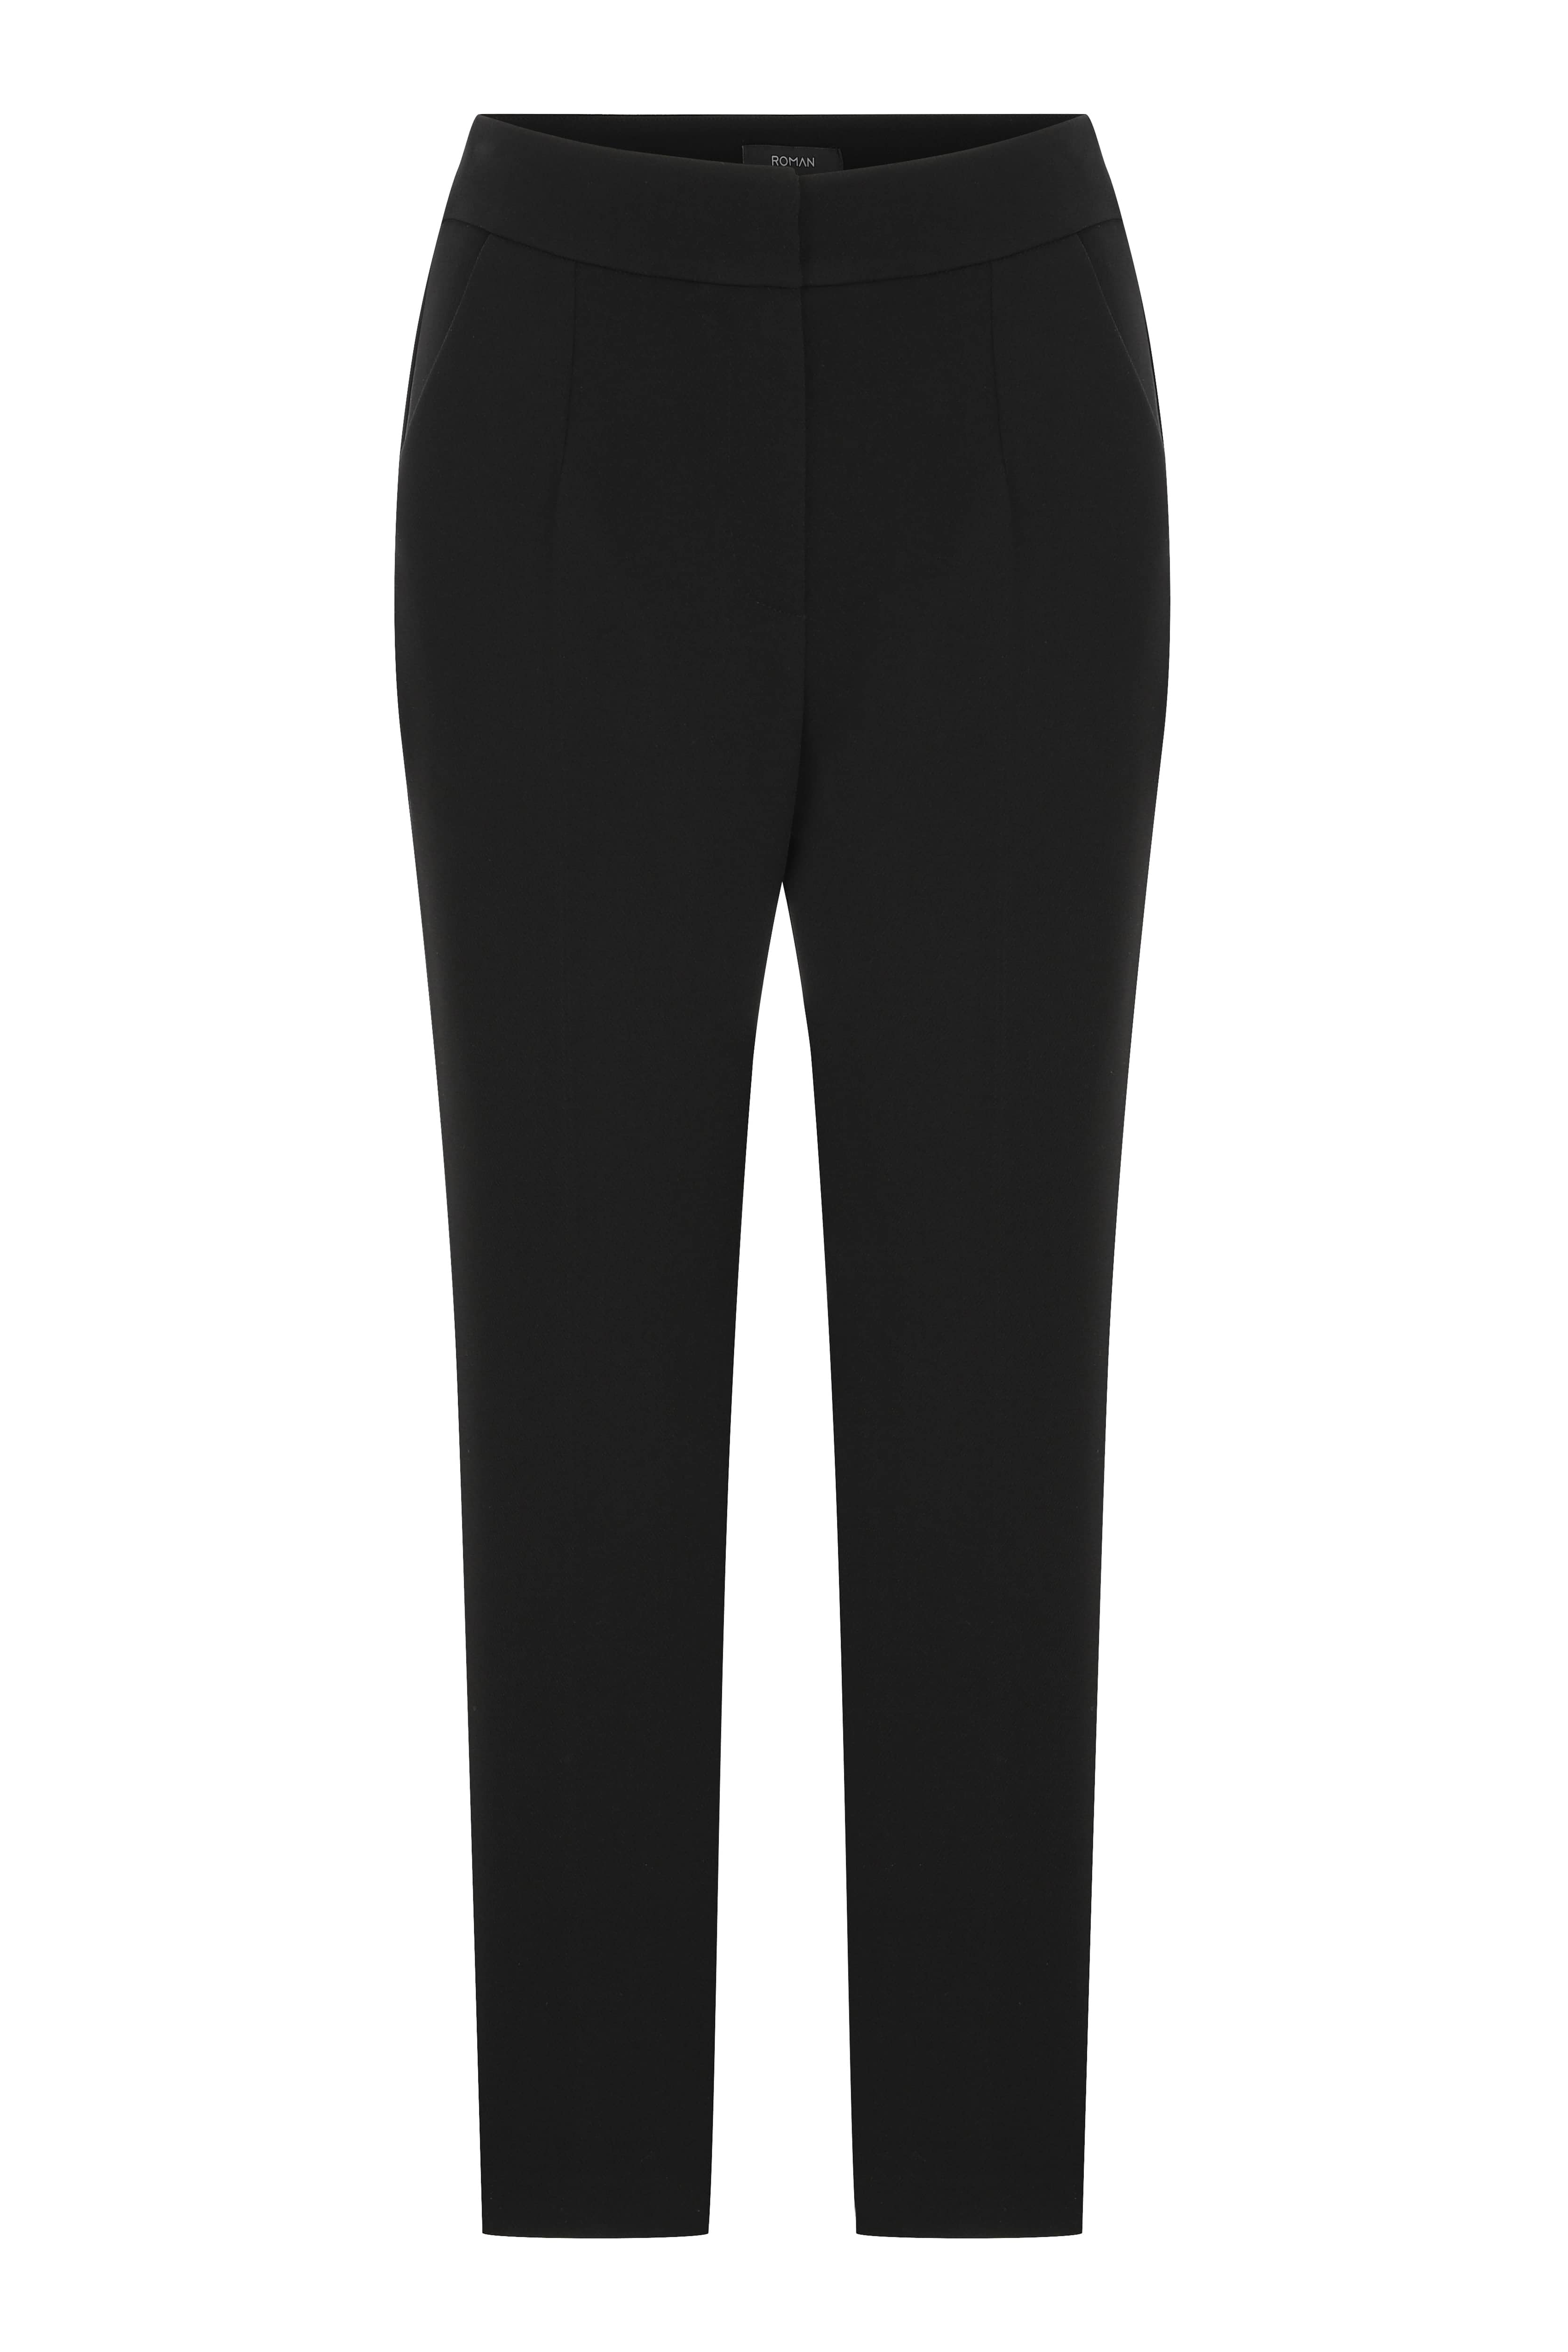 Formal Cropped Women's Pants---[BLACK]